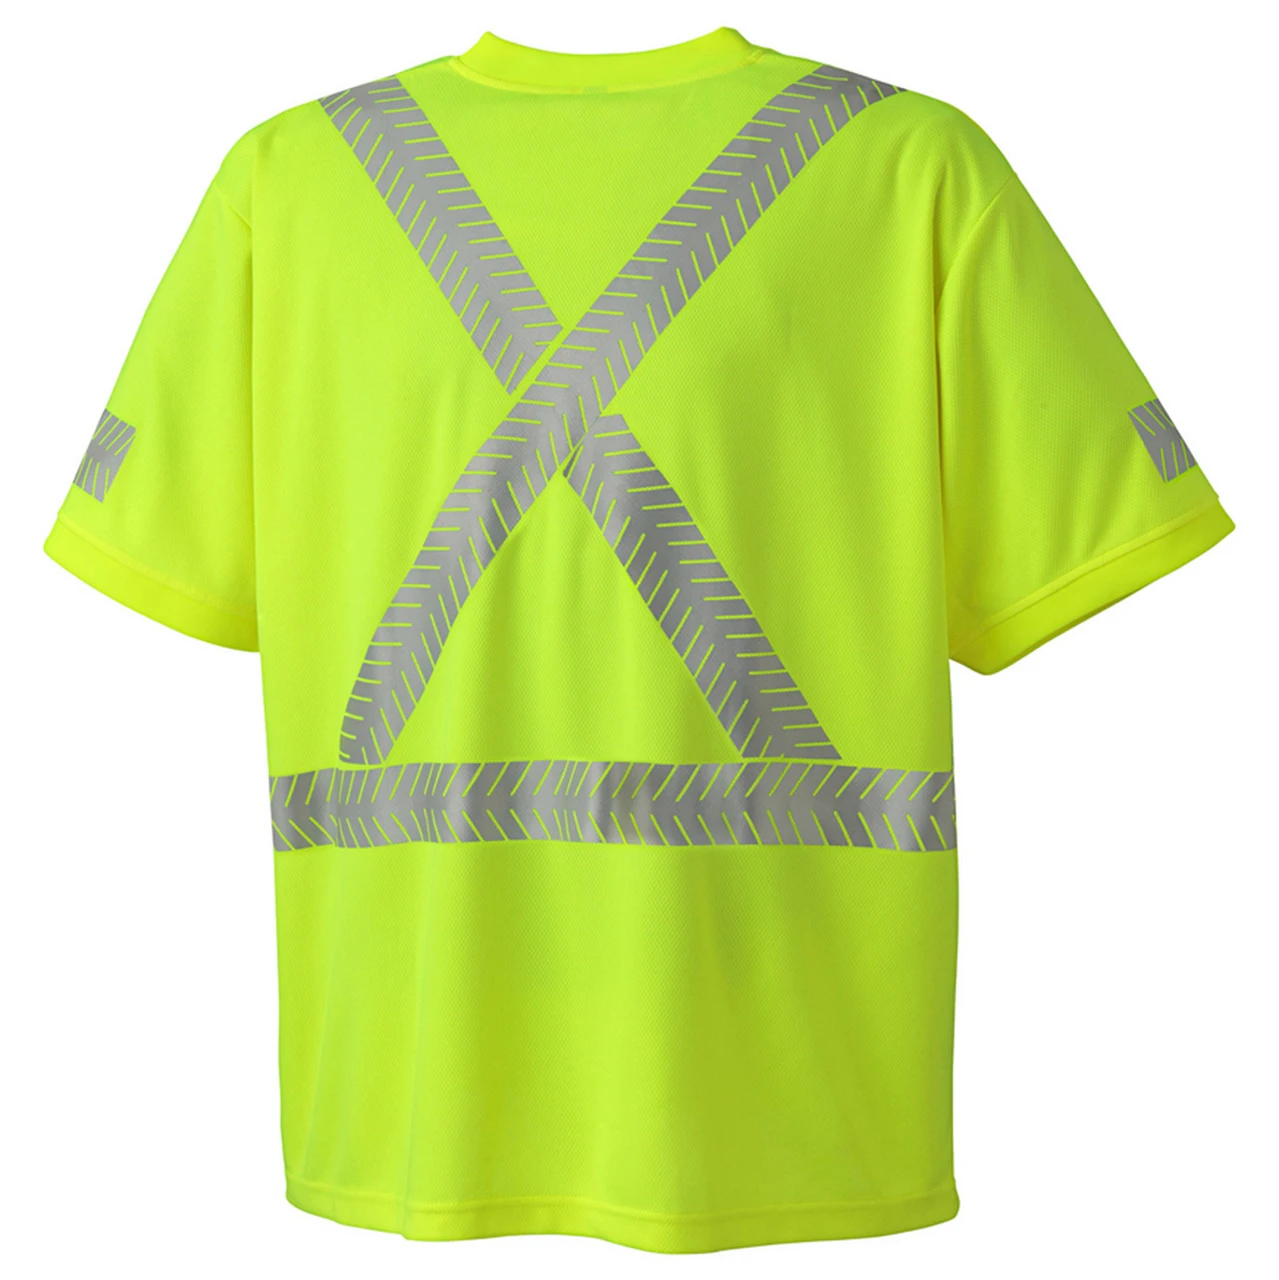 HIGH VISIBILITY HI VIZ SWEATSHIRT REFLECTIVE SAFETY WORK WEAR LONG SLEEVE shirt shirts for men